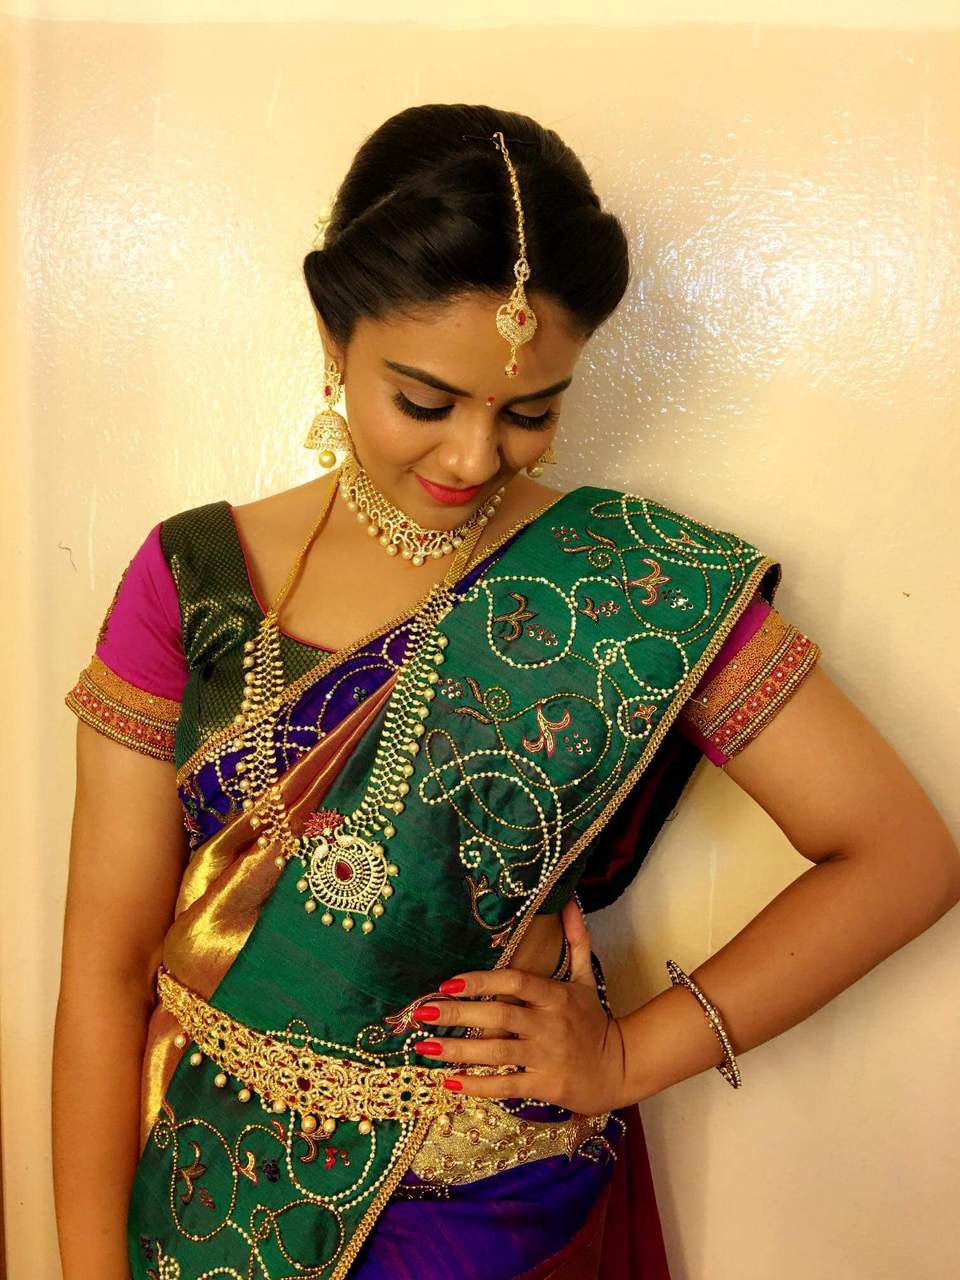 Telugu Film Industry Actress Sreemukhi in Saree Images